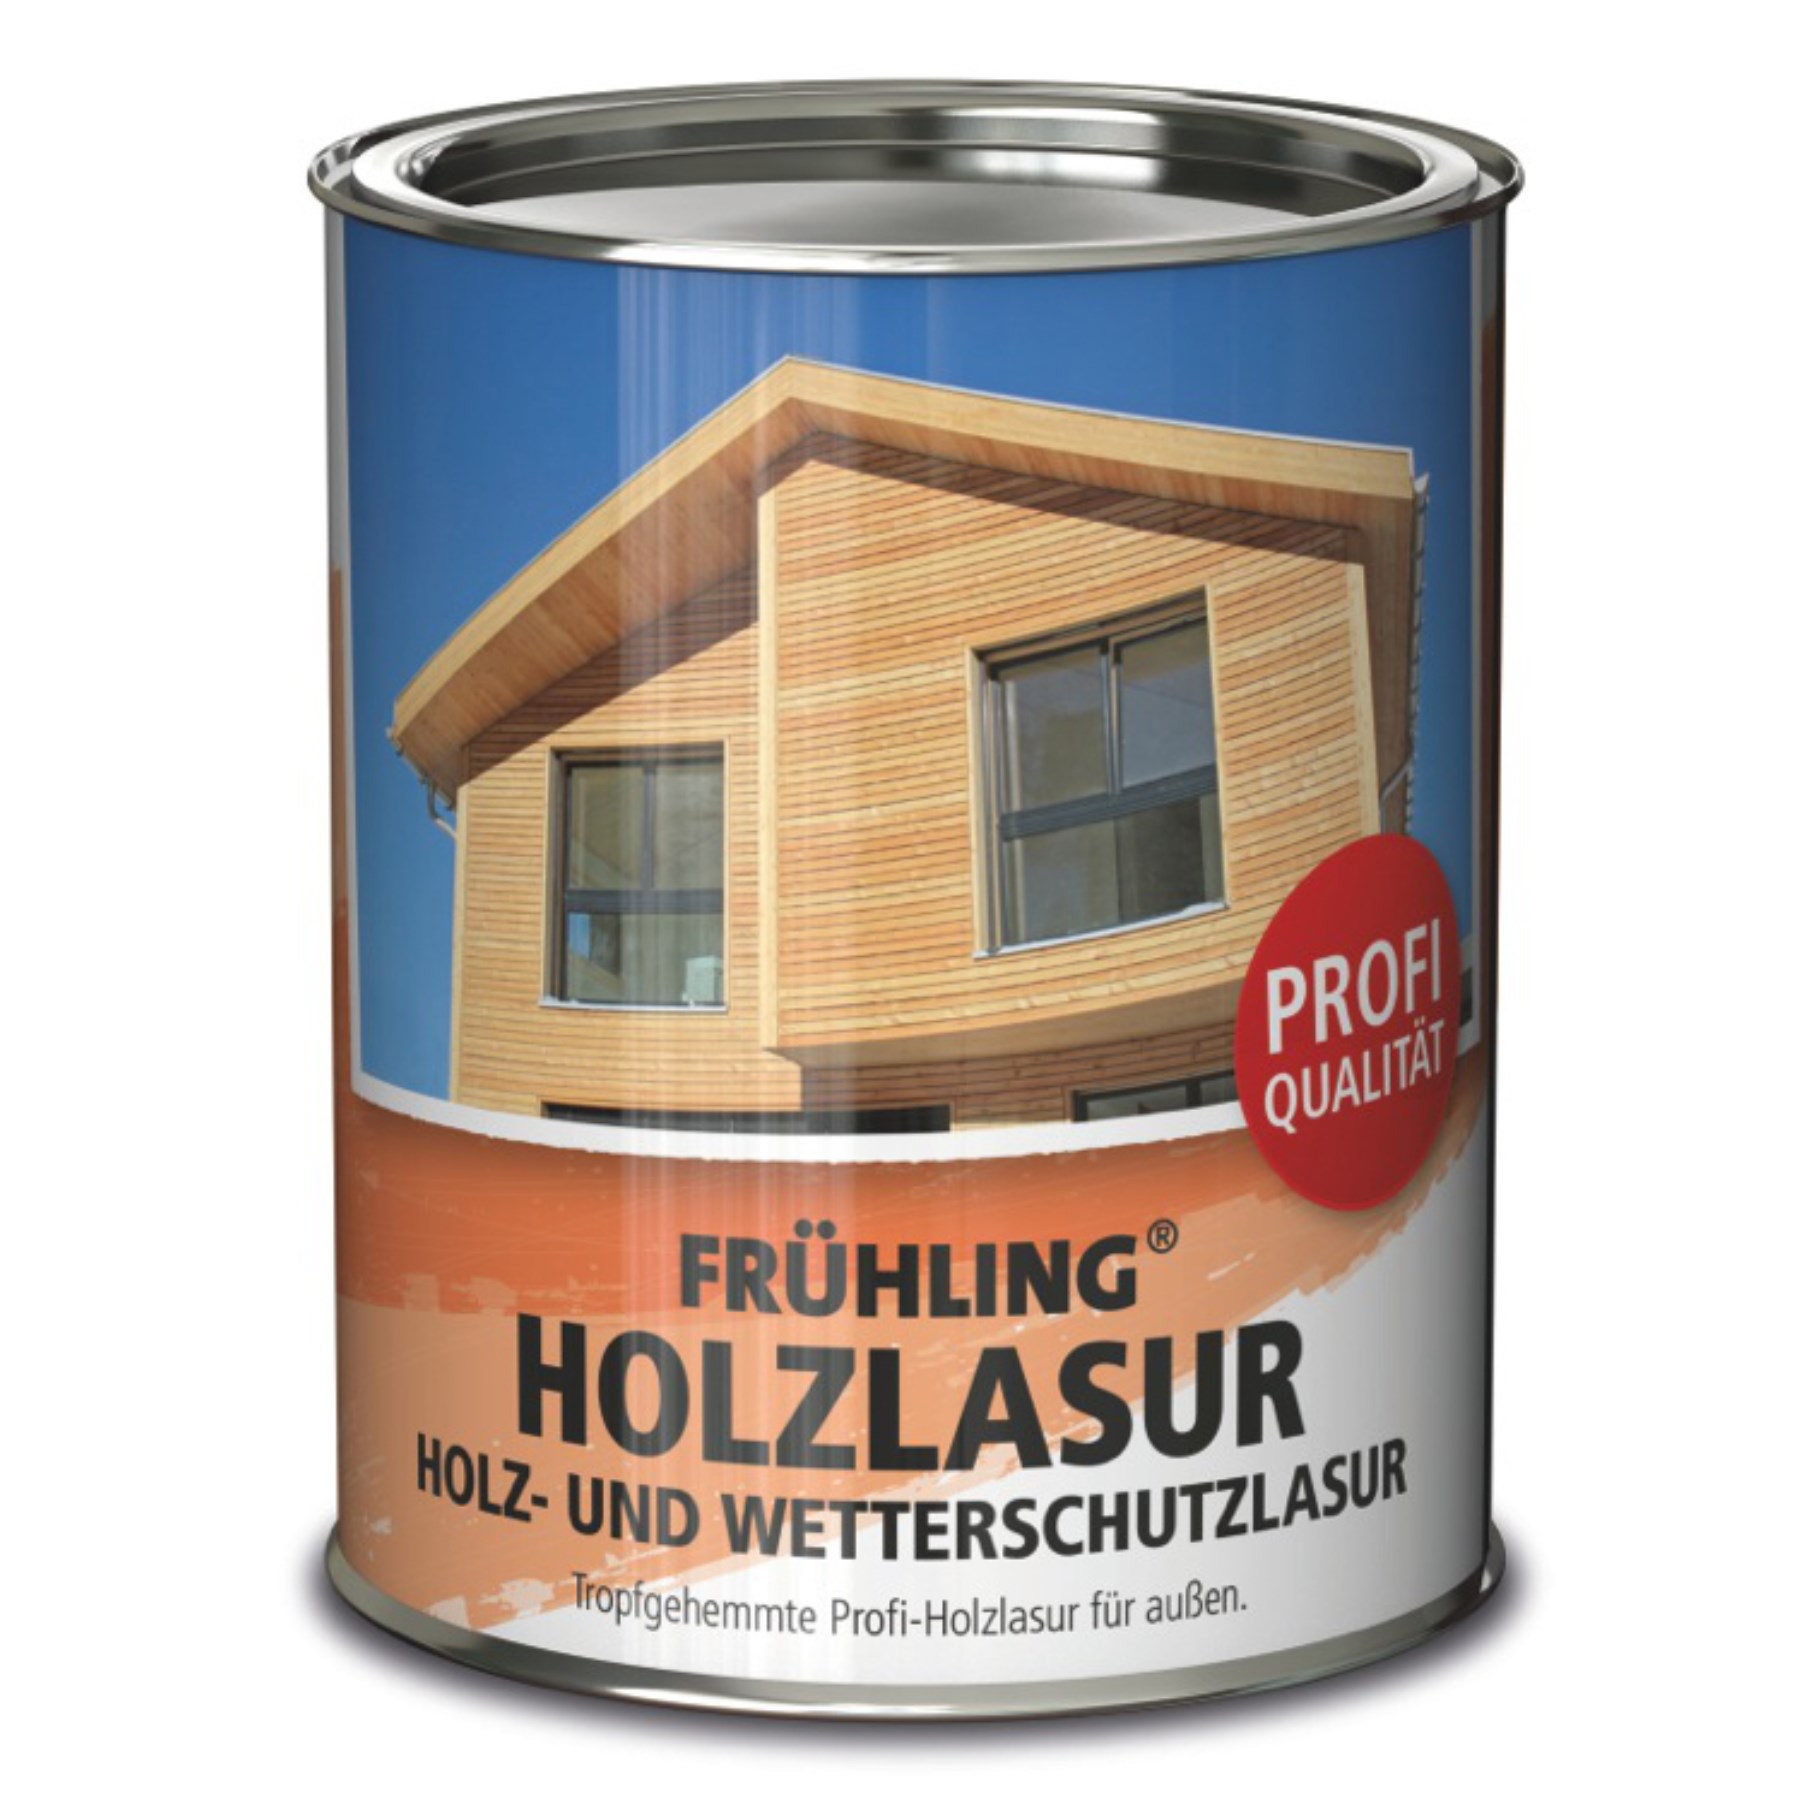 1274772 - Holzlasur Nussbaum 750ml 